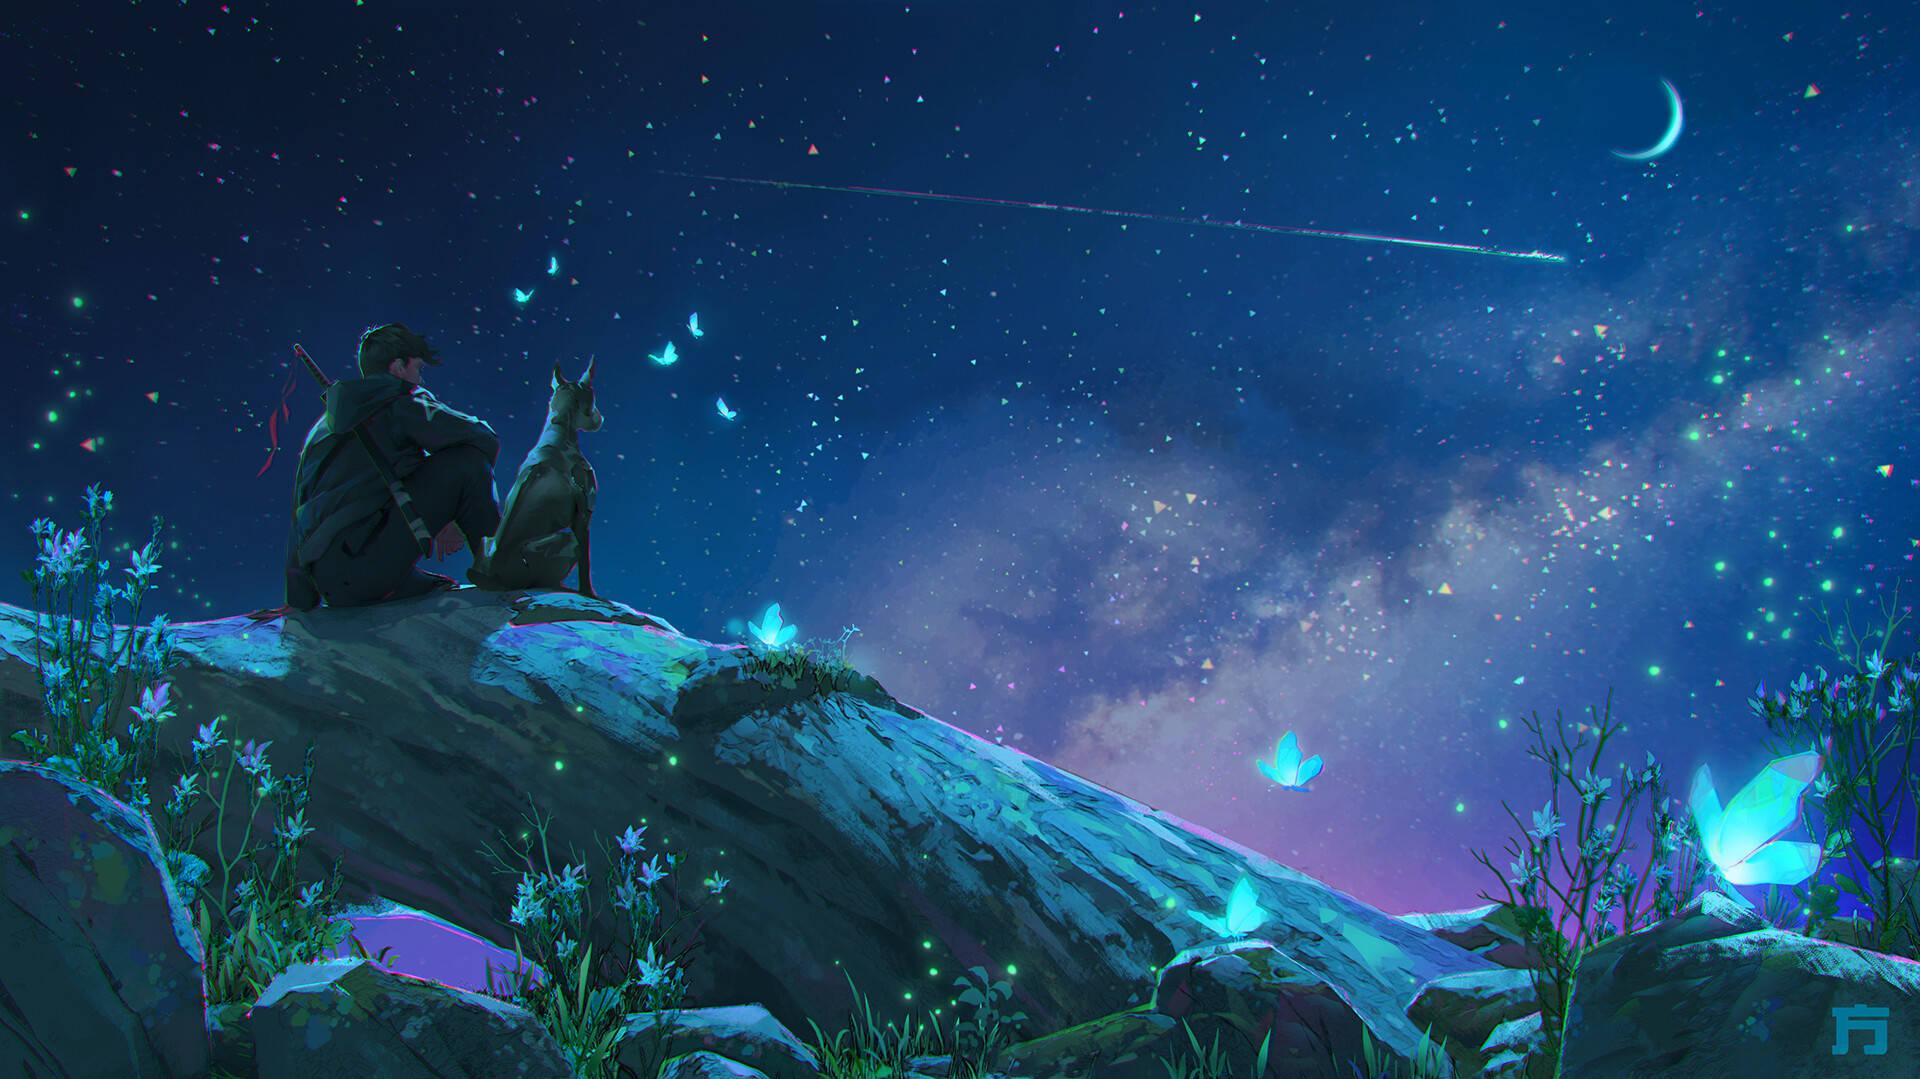 Download Under Night Sky Alone Boy Anime Wallpaper